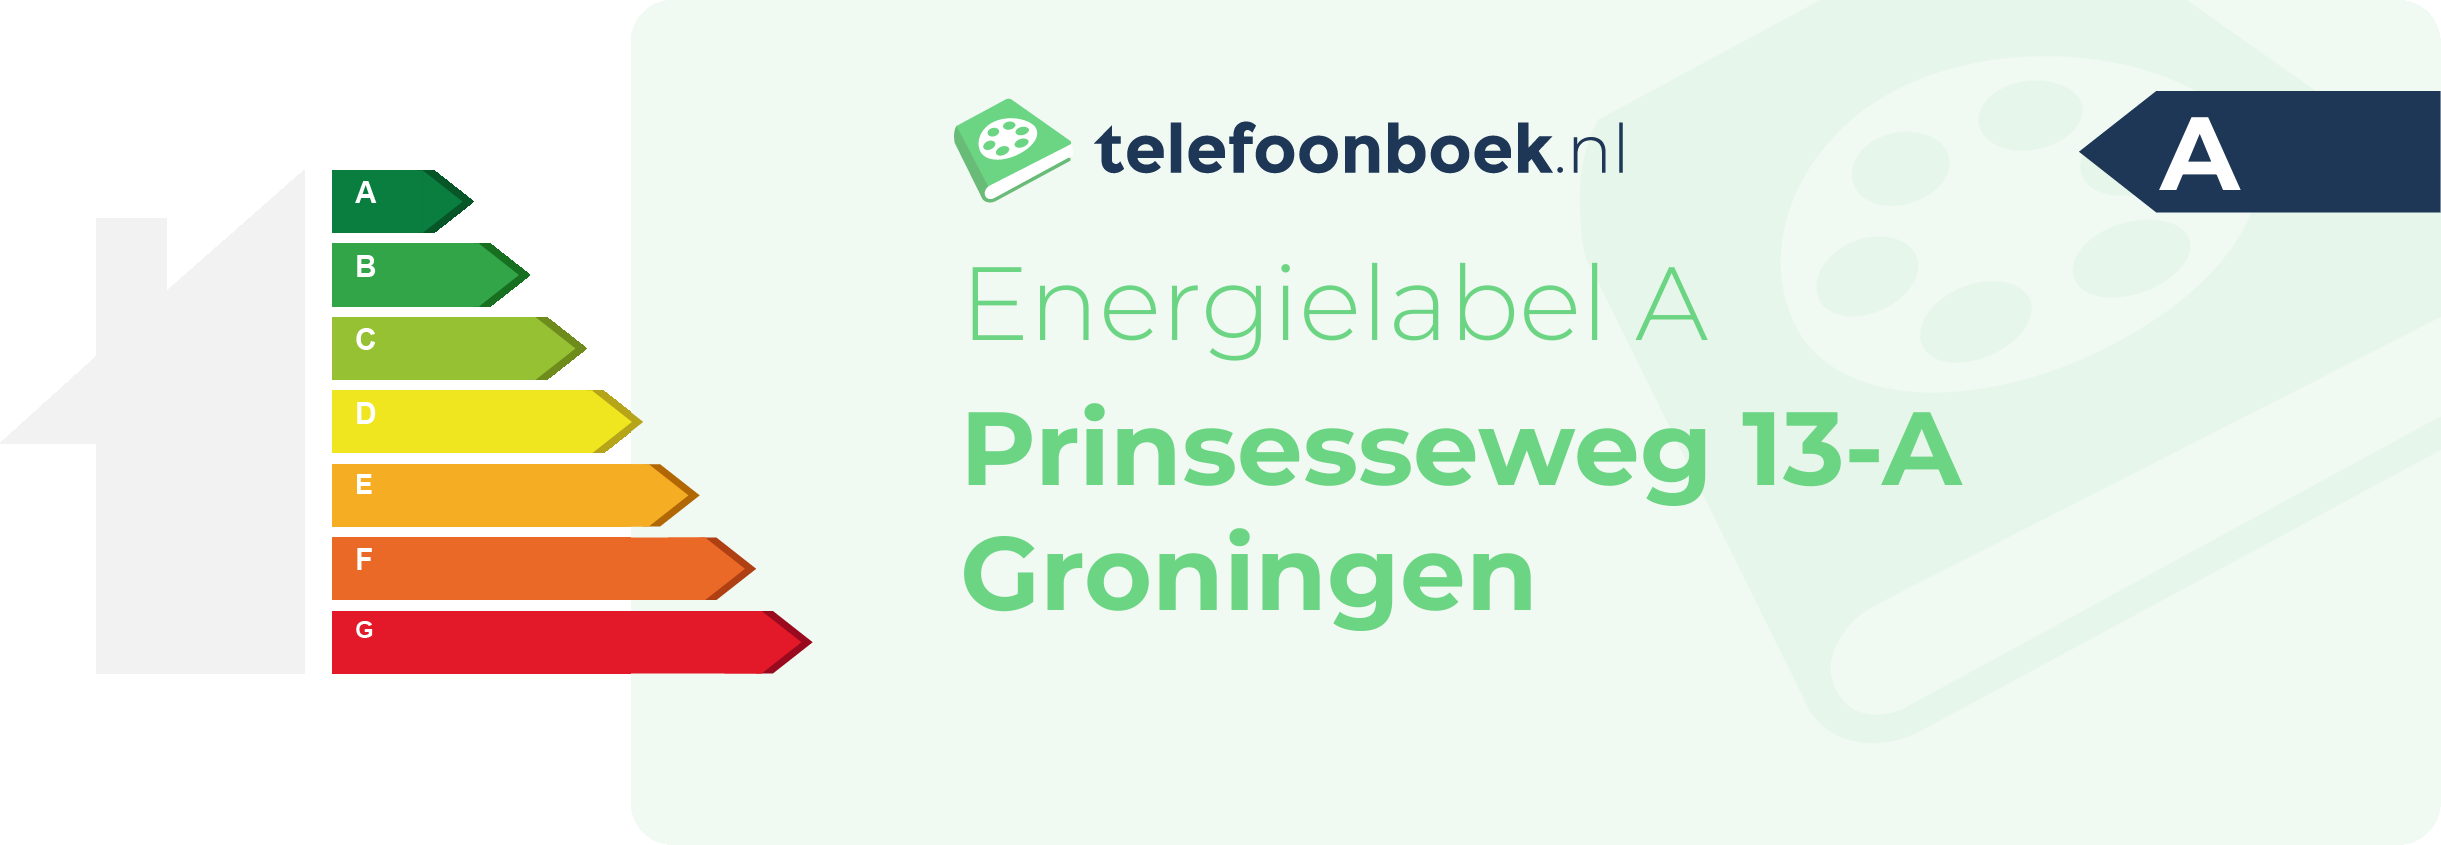 Energielabel Prinsesseweg 13-A Groningen